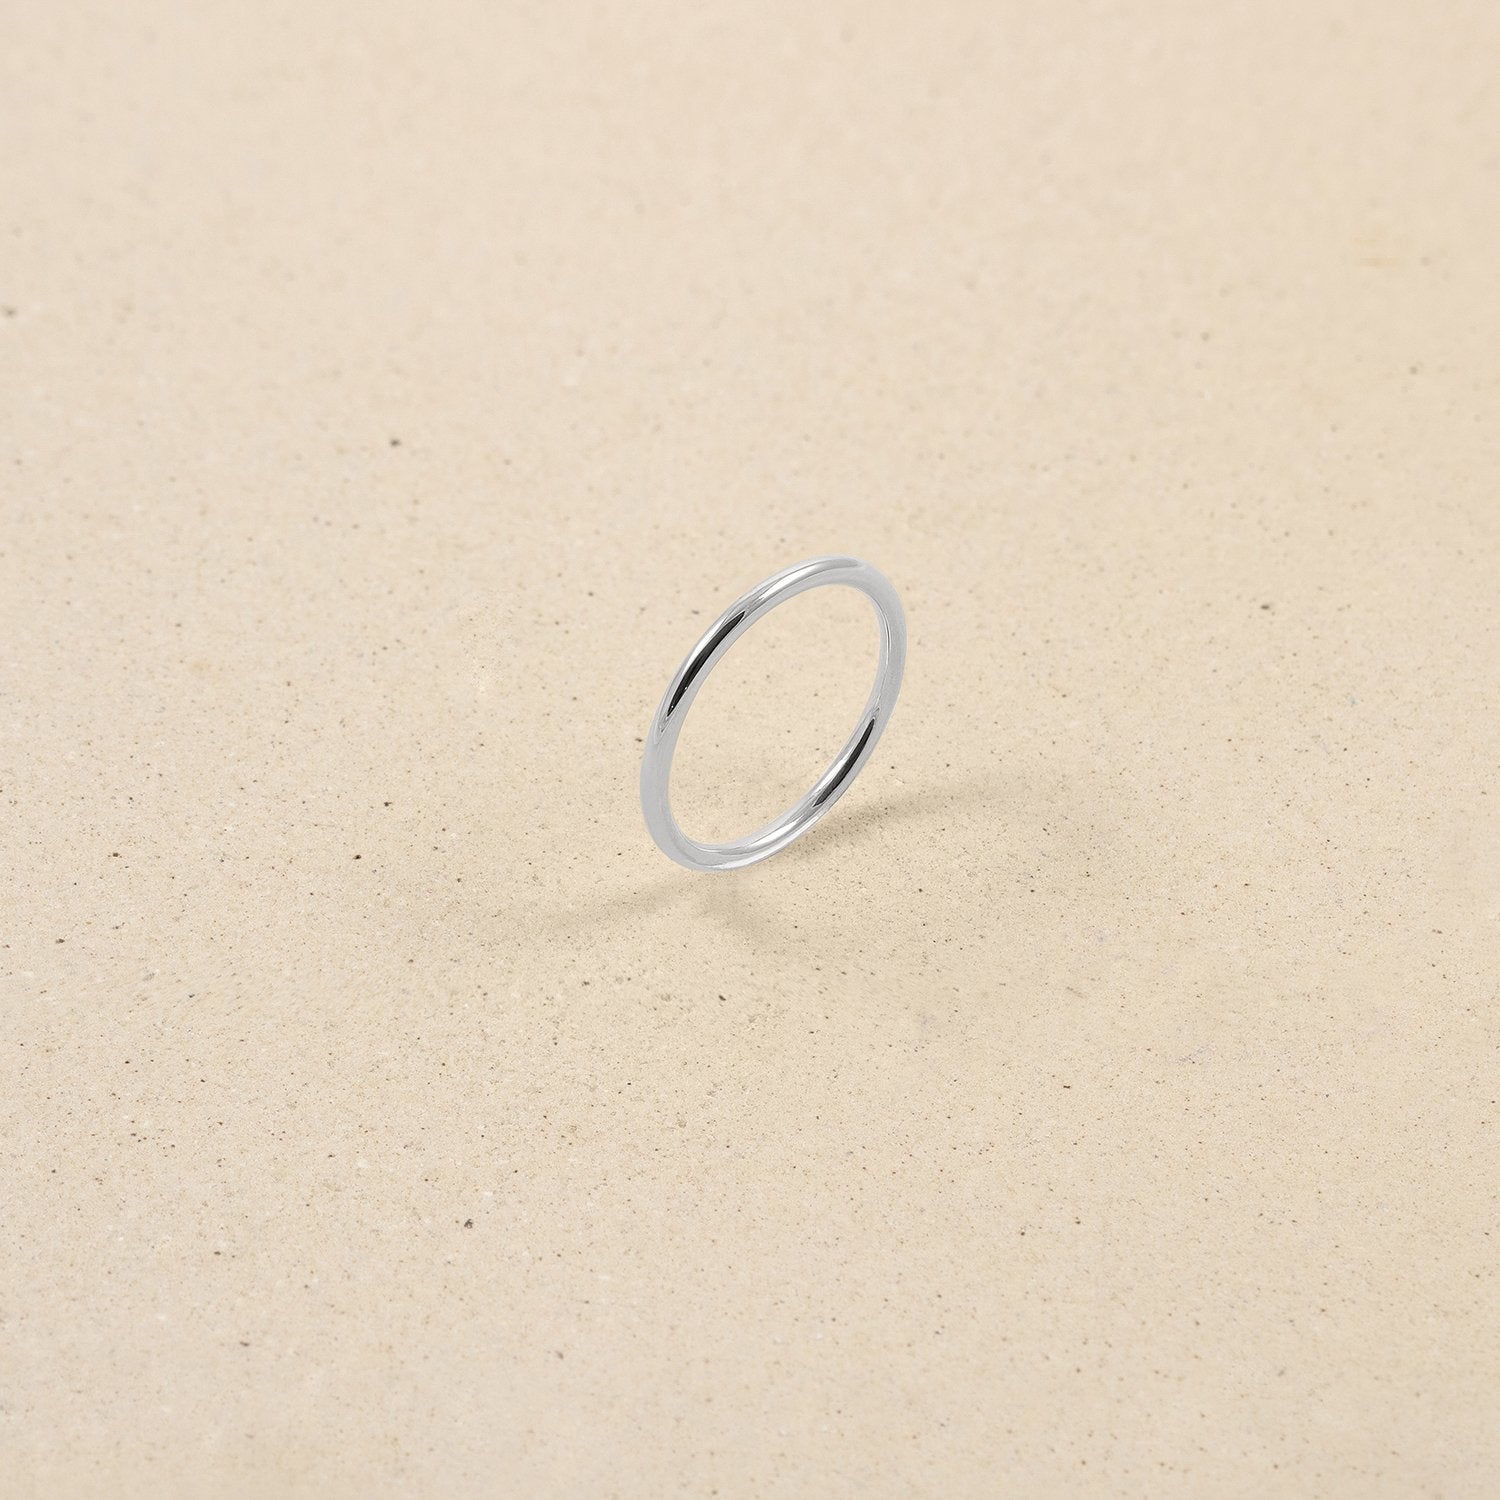 Simple Reminder Ring Jewelry stilnest Rhodium Plated 925 Silver XS - 49 (15.6mm) 